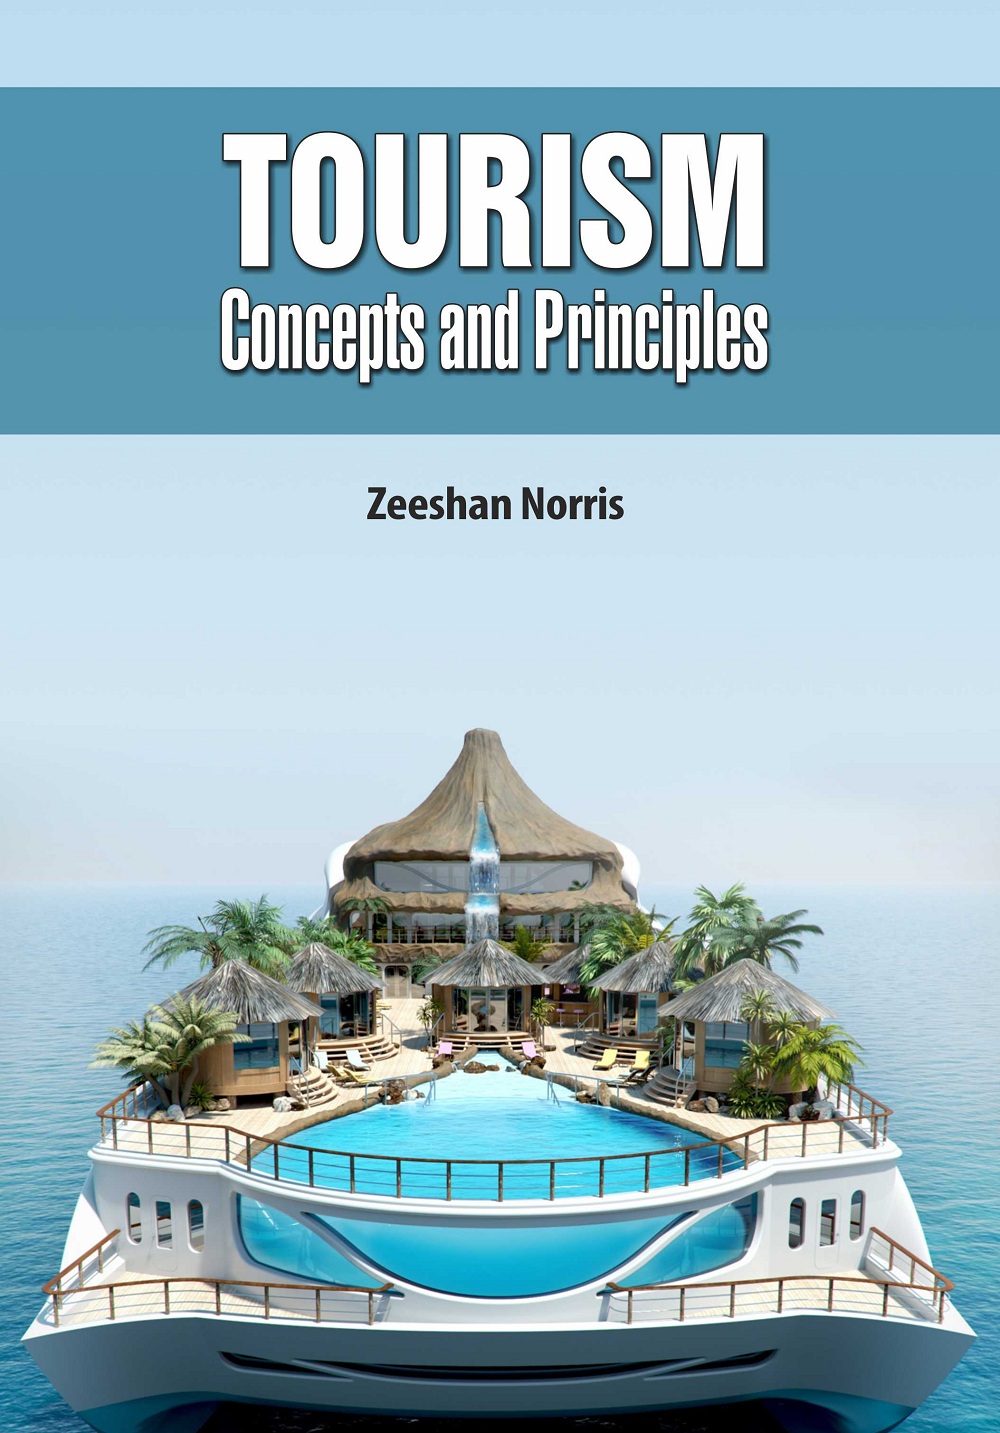 Tourism Concepts and Principles